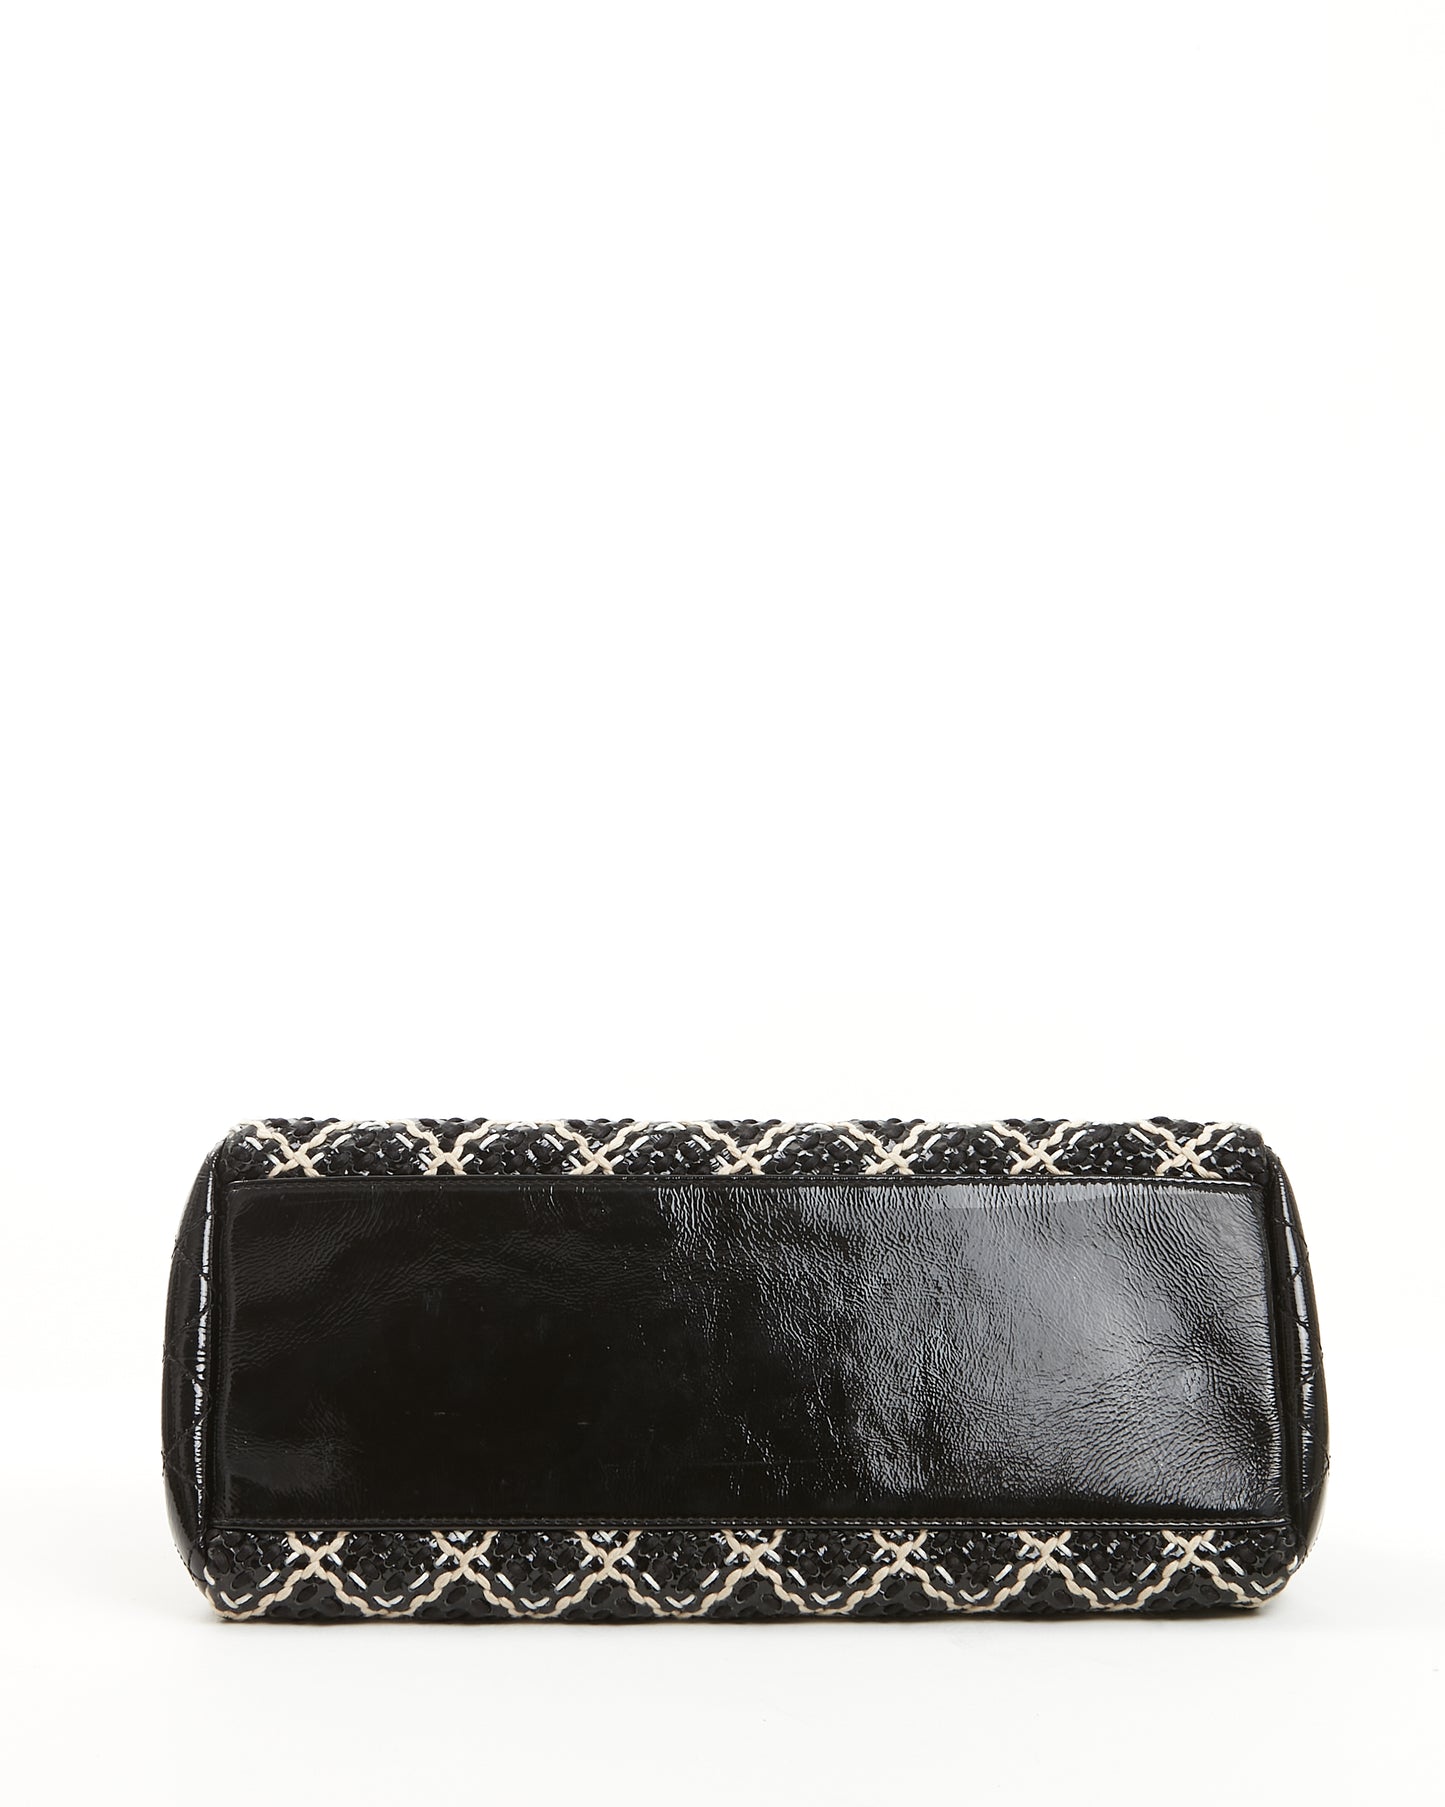 Chanel Black/White Tweed Patent Leather Bowling Shoulder Bag